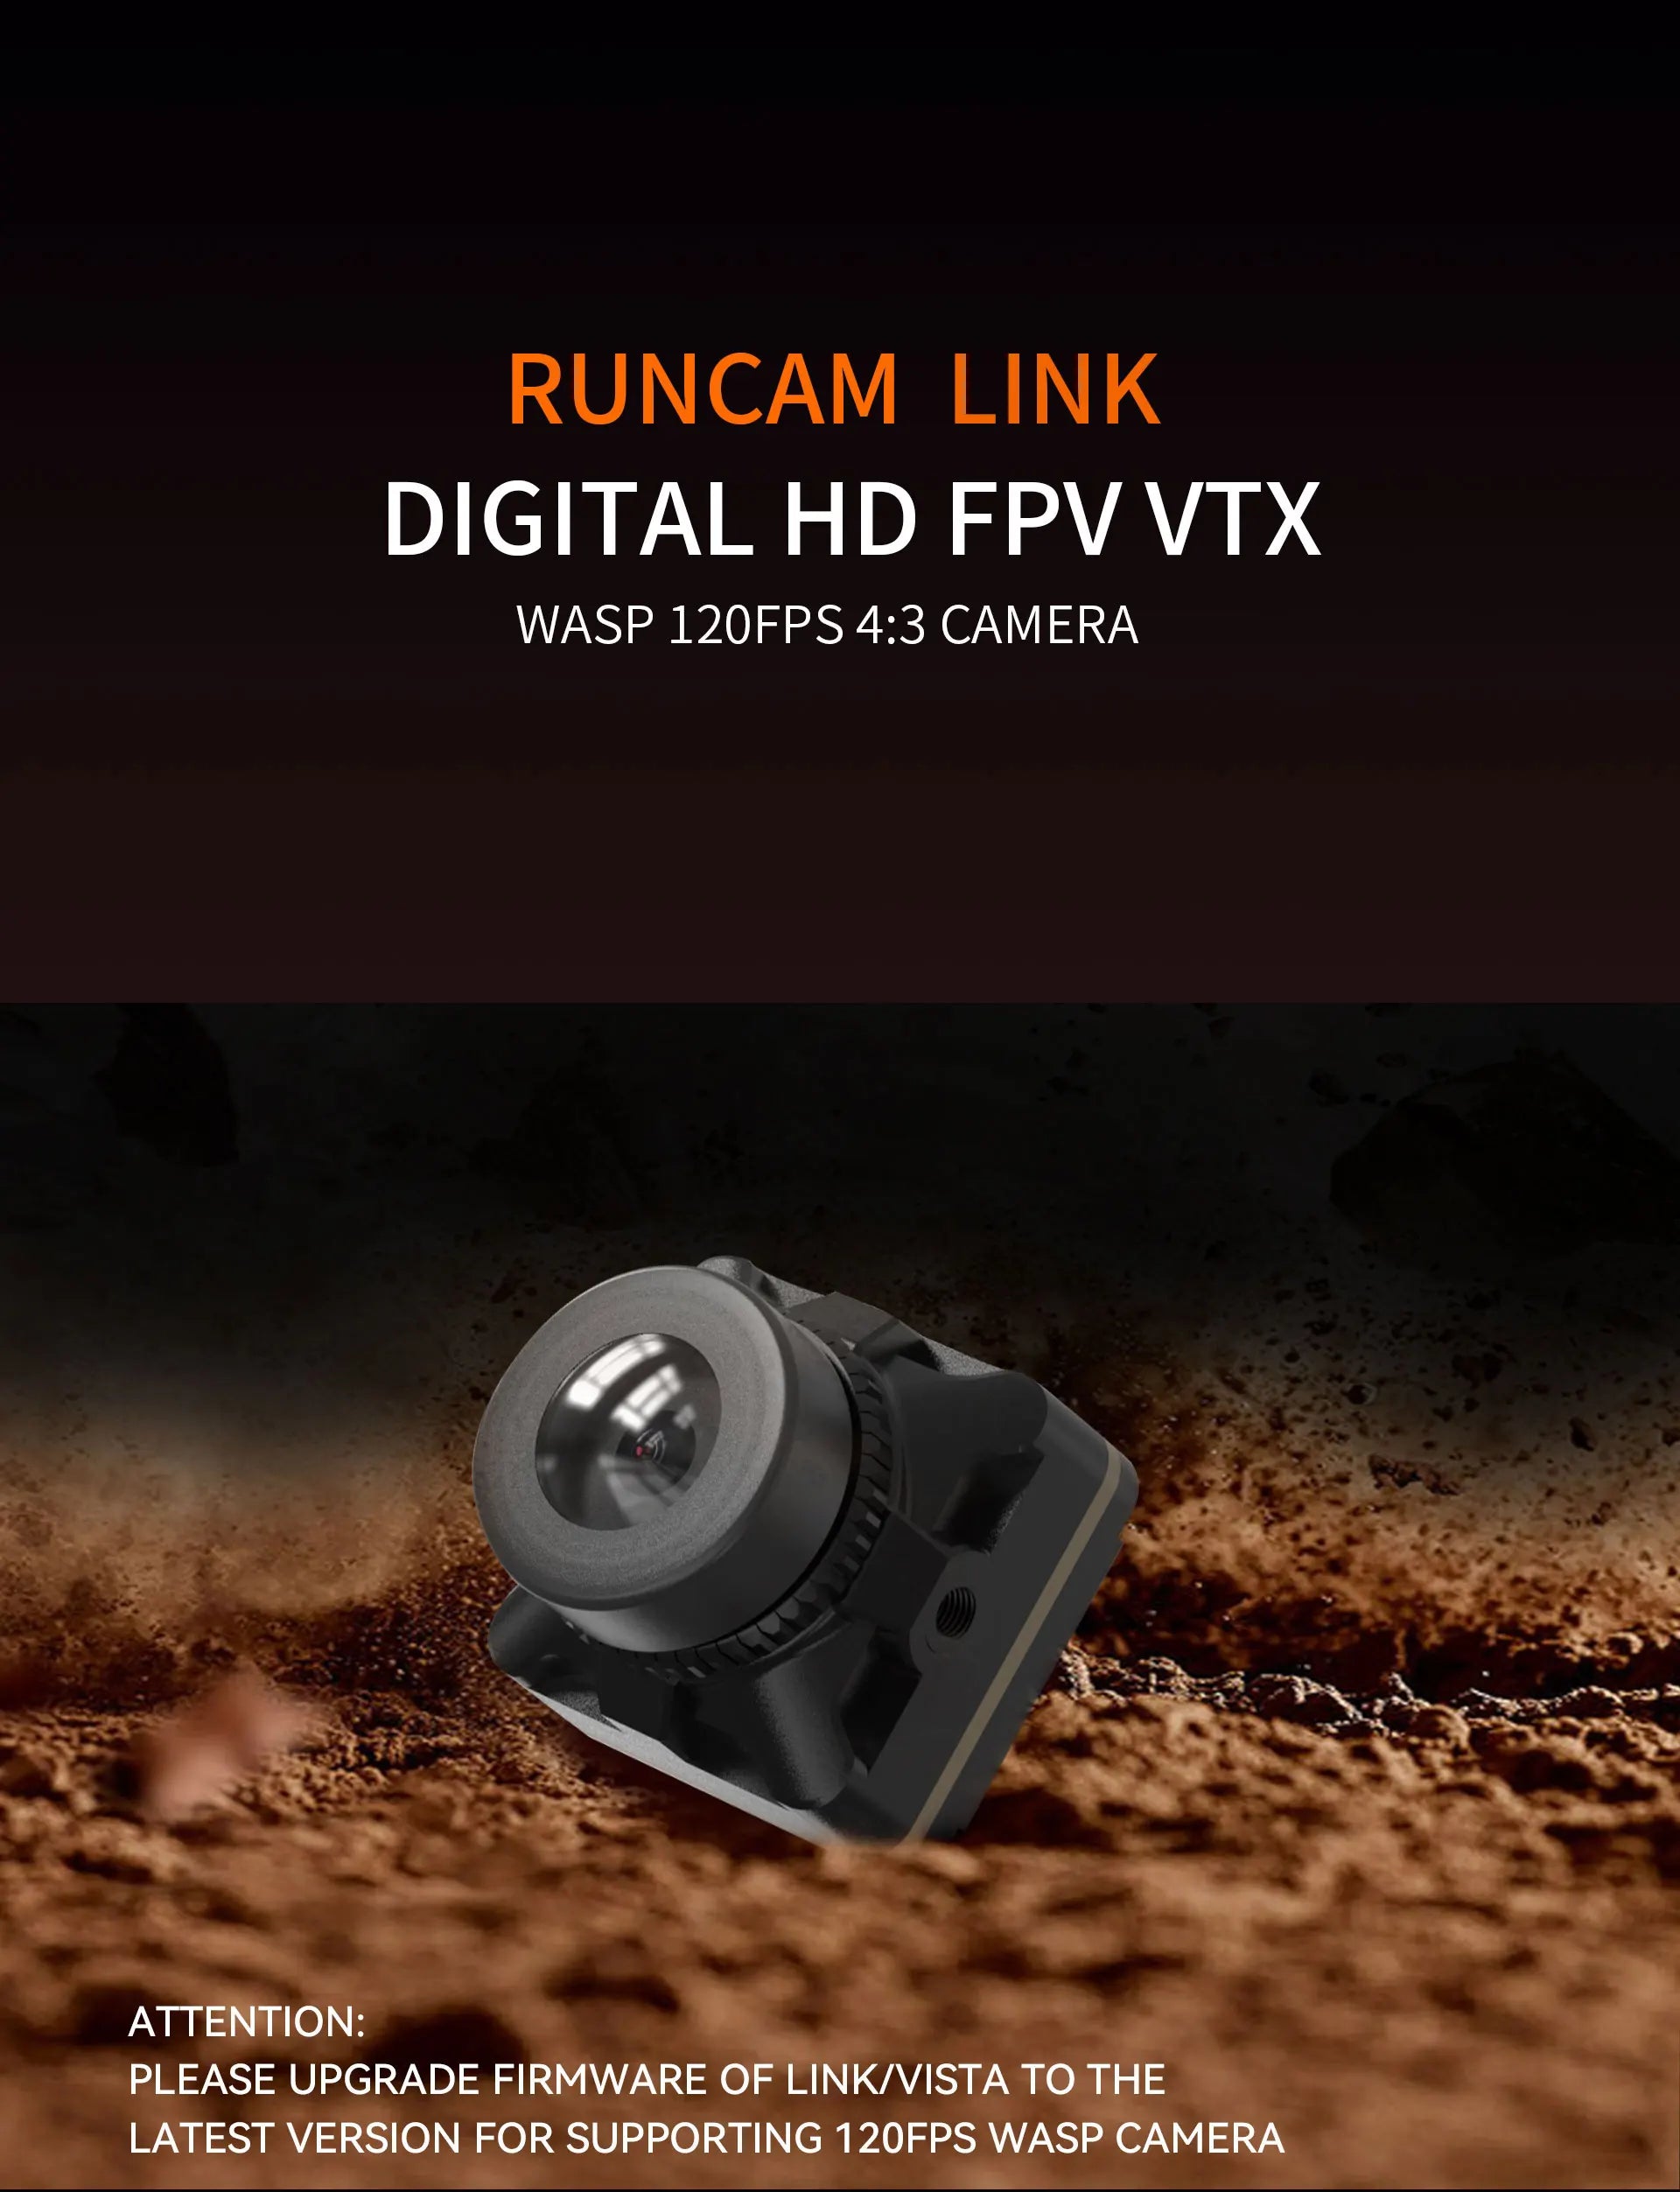 RunCam Link Wasp, RUNCAM LINK DIGITAL HD FPV VTX WASP 120FP